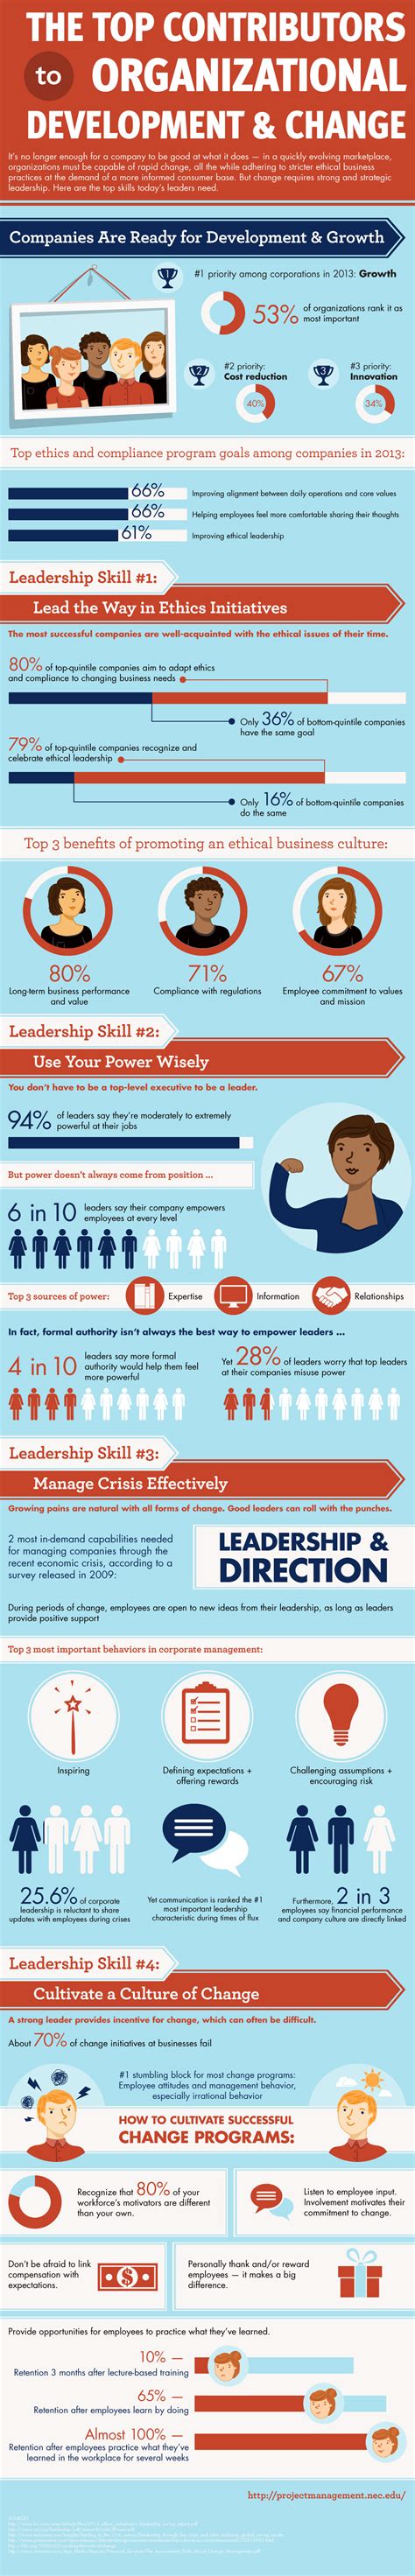 leadership skills infographic